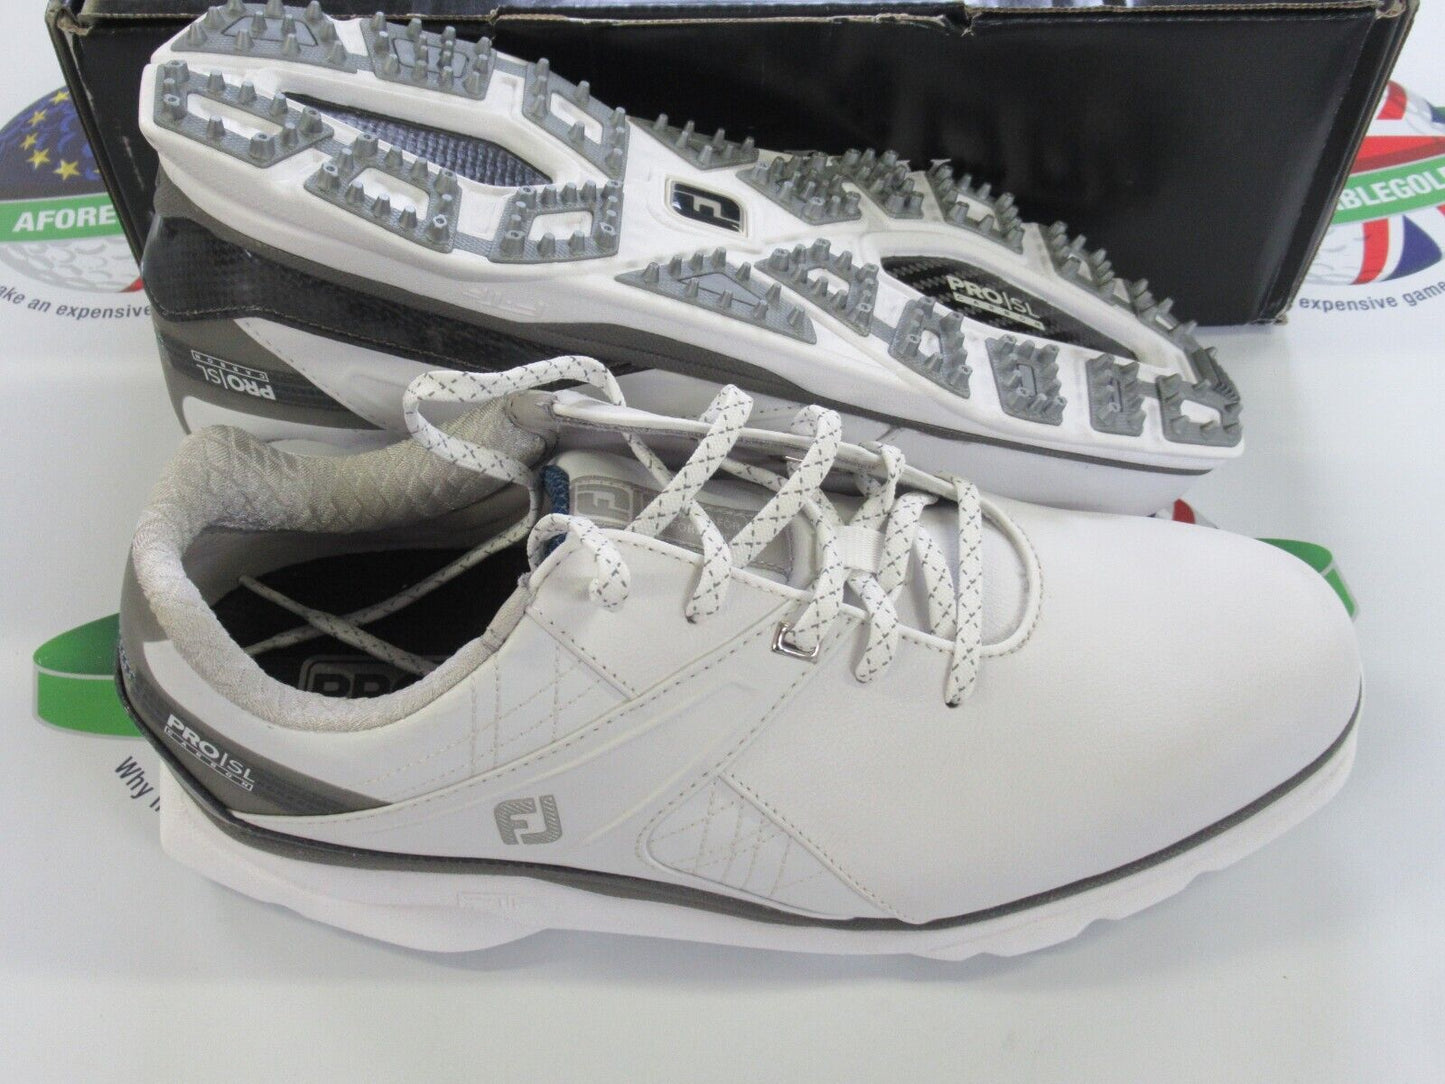 footjoy pro sl carbon waterproof golf shoes 53104k white/silver size 8.5 wide